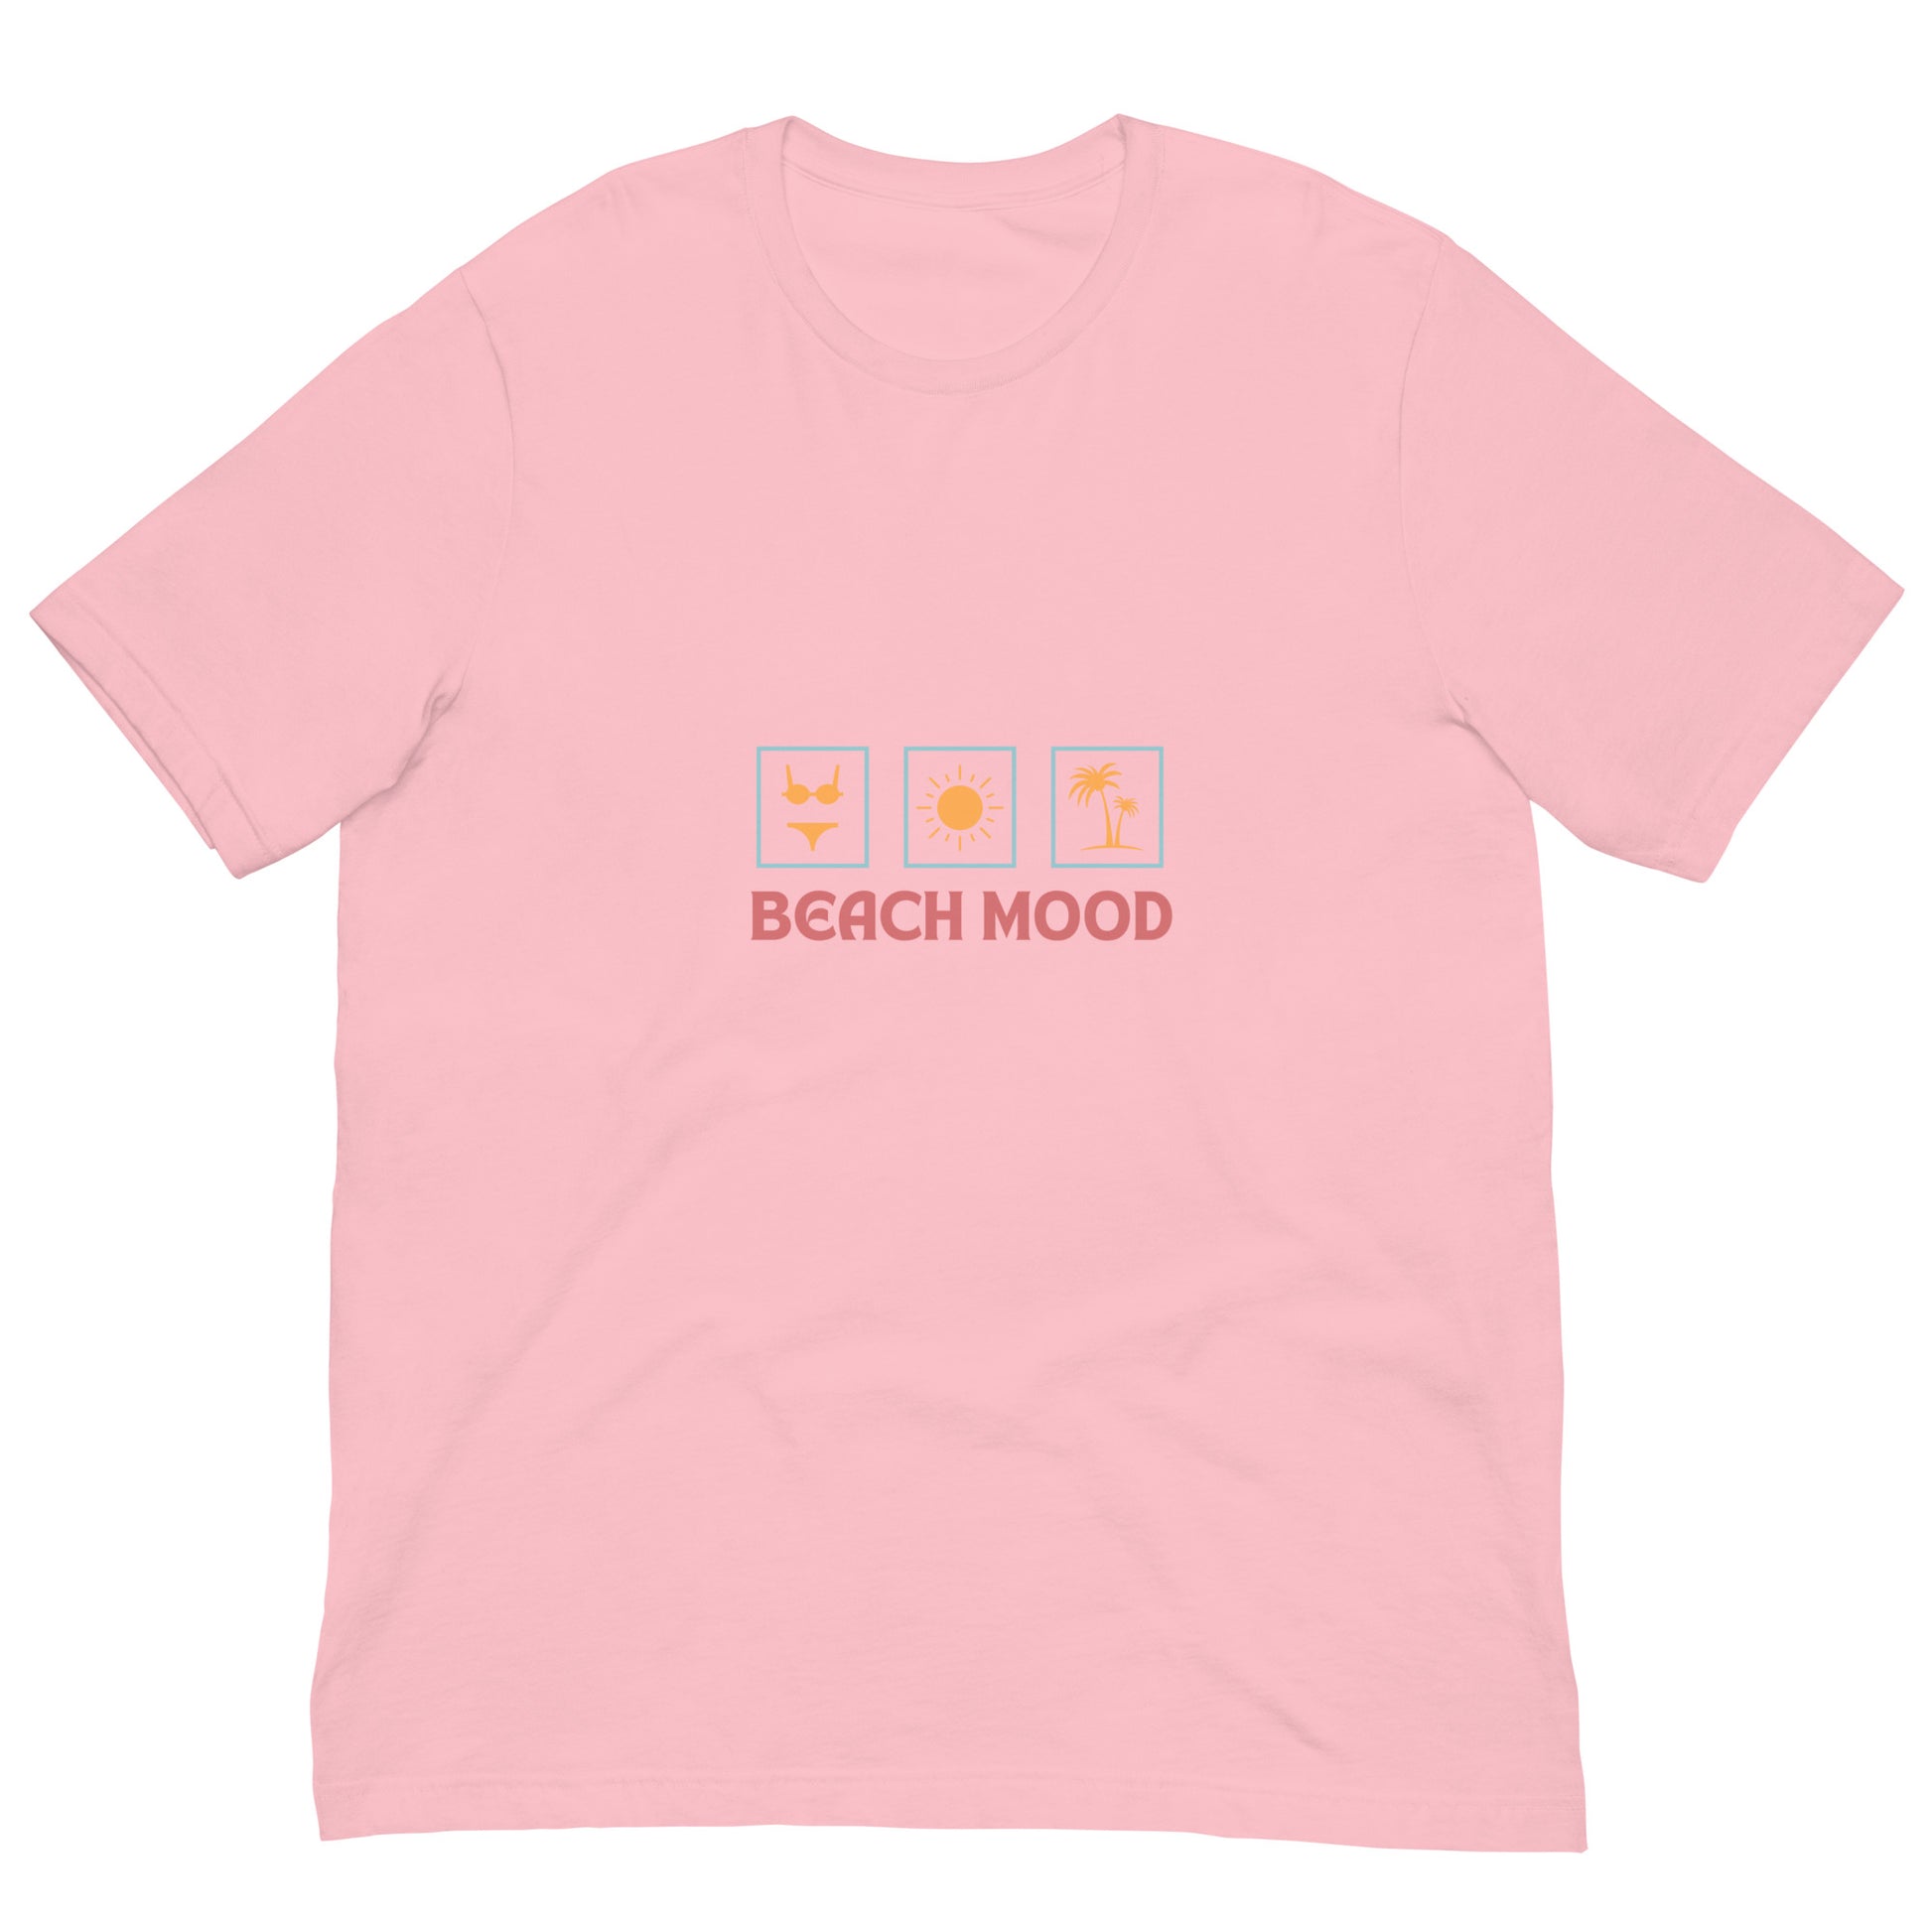 Beach Mood Tee